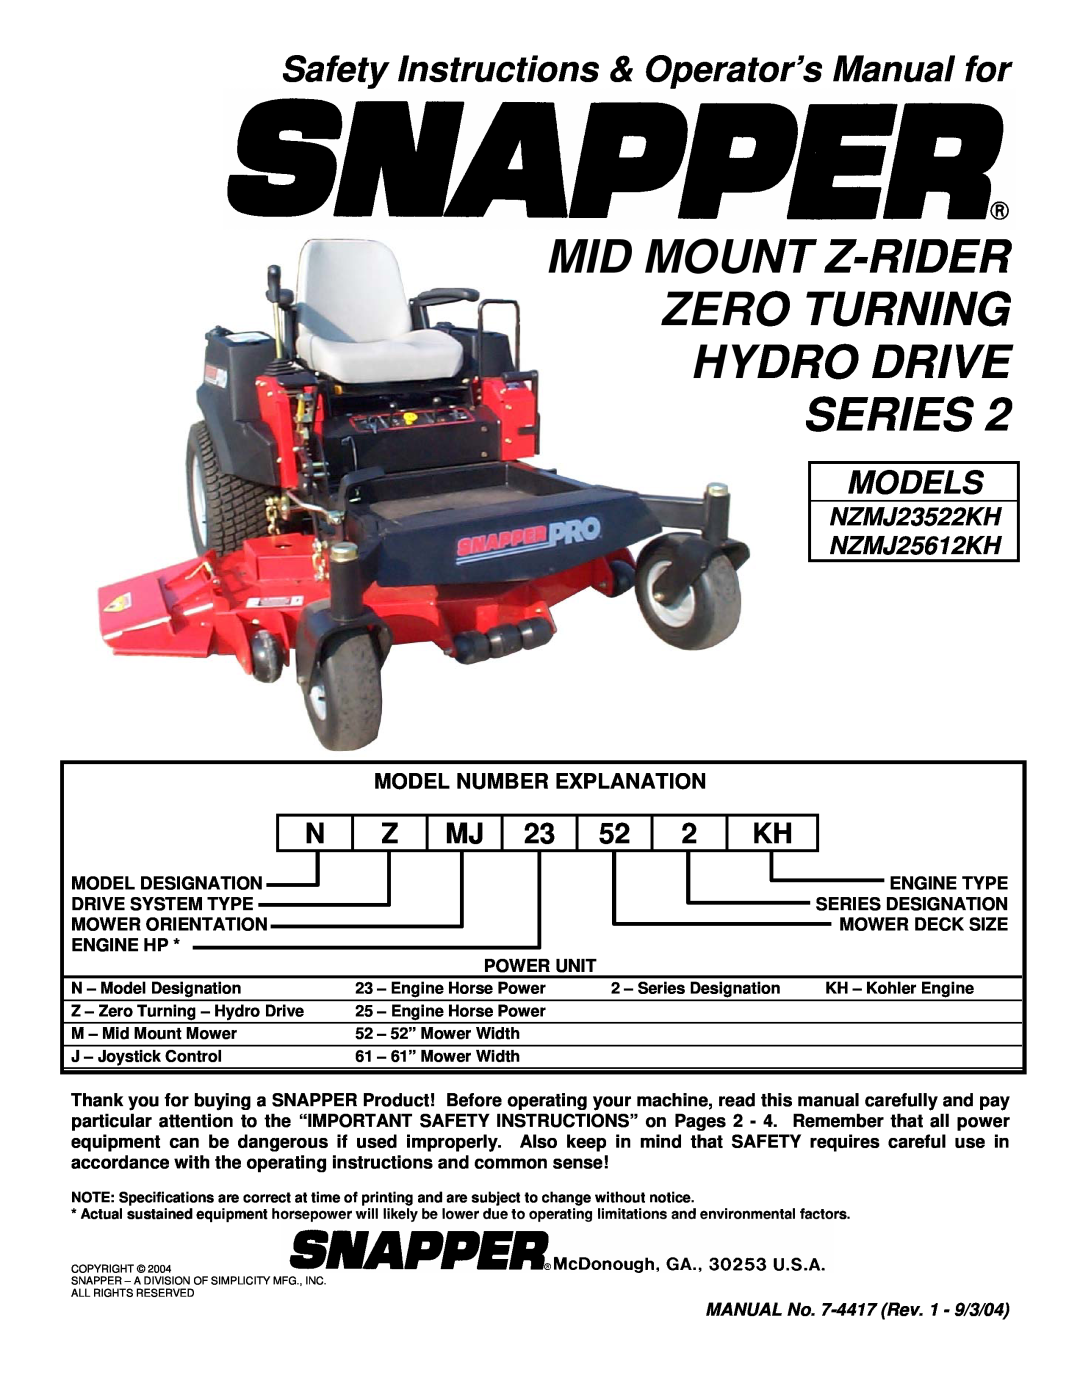 Snapper NZMJ25612KH, NZMJ23522KH important safety instructions Safety Instructions & Operator’s Manual for, Models 